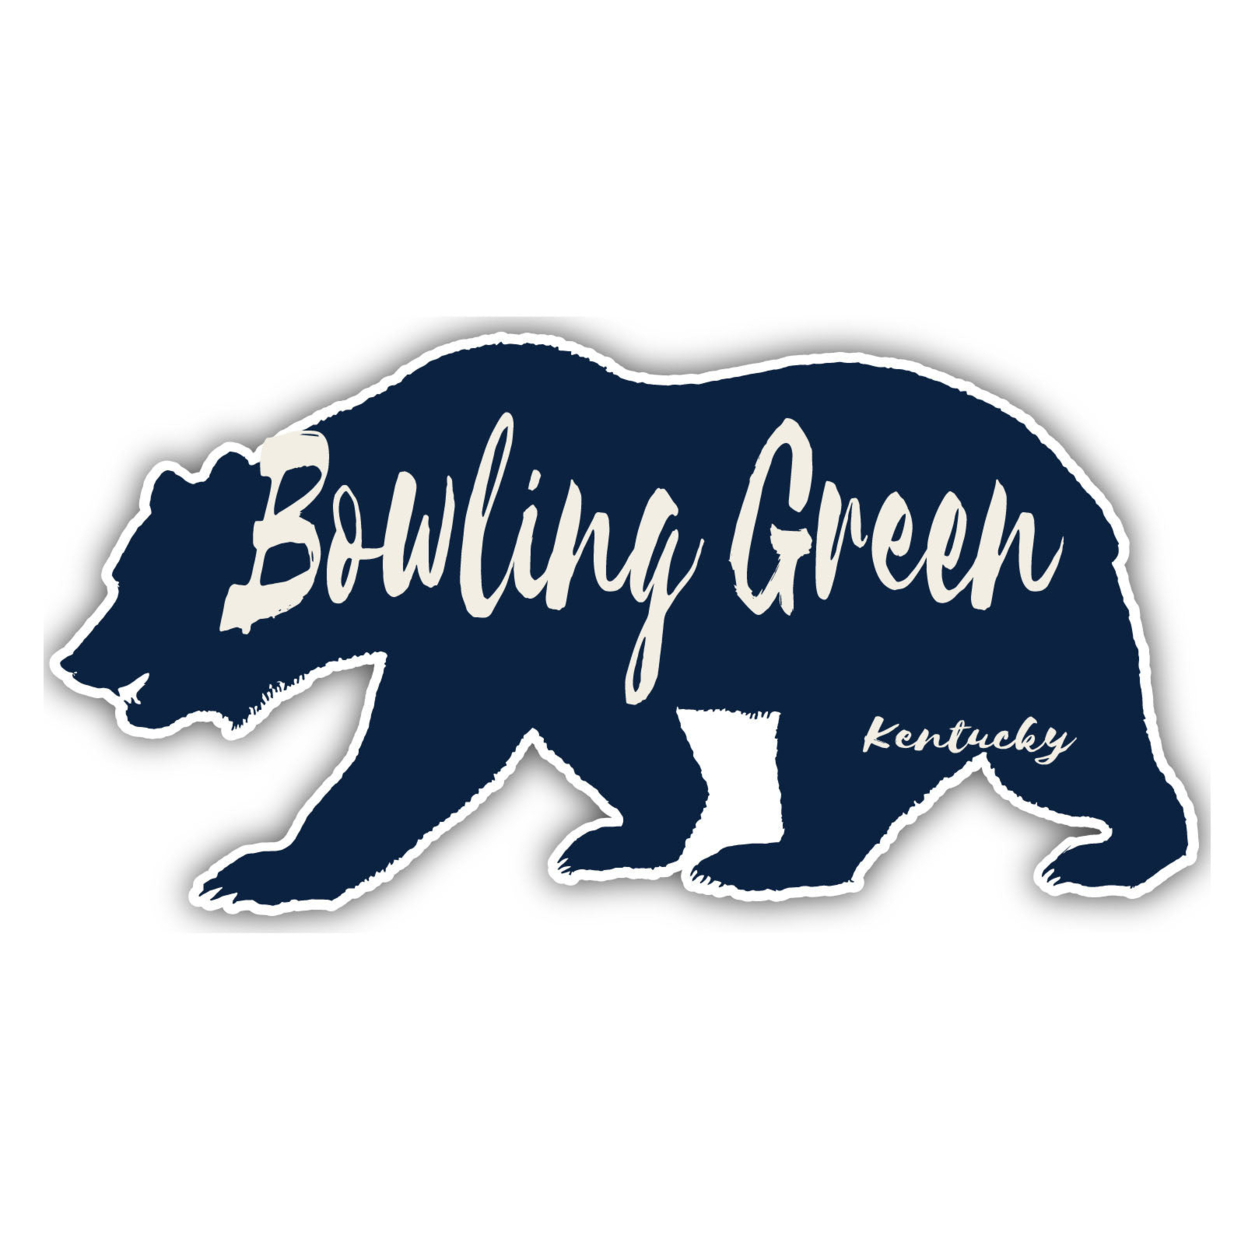 Bowling Green Kentucky Souvenir Decorative Stickers (Choose Theme And Size) - Single Unit, 4-Inch, Bear